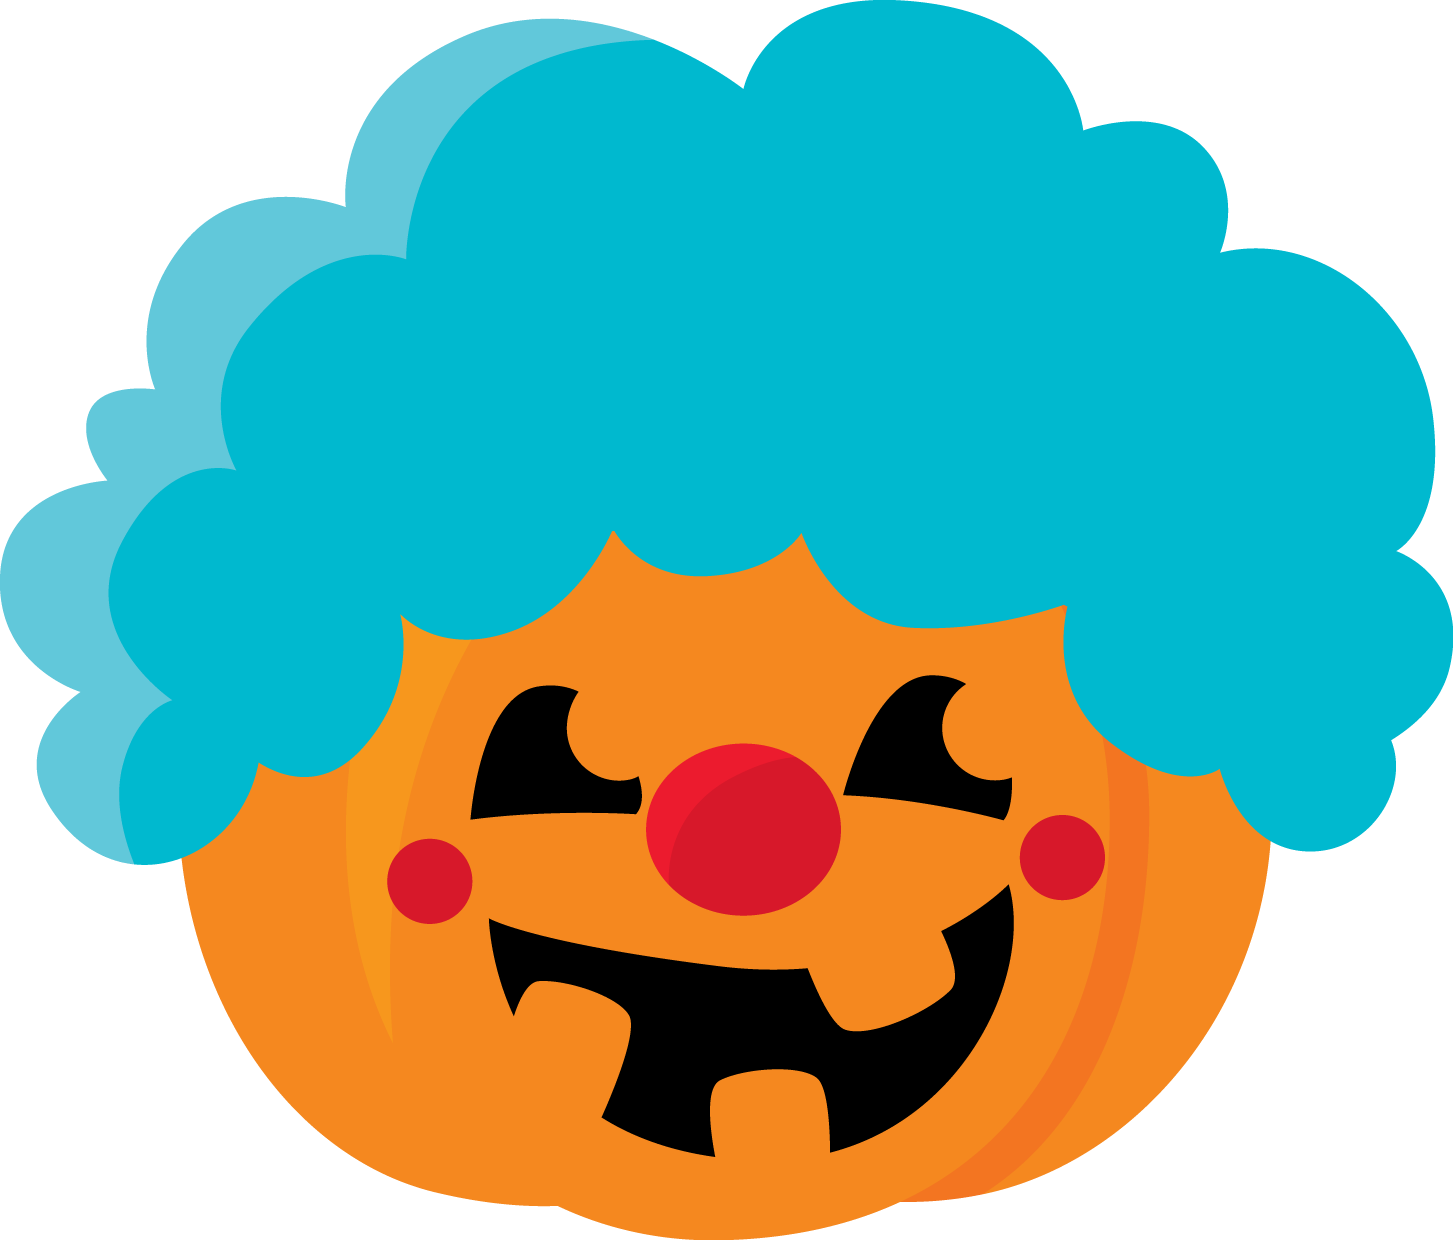 Clown Pumpkin Halloween Graphic PNG image